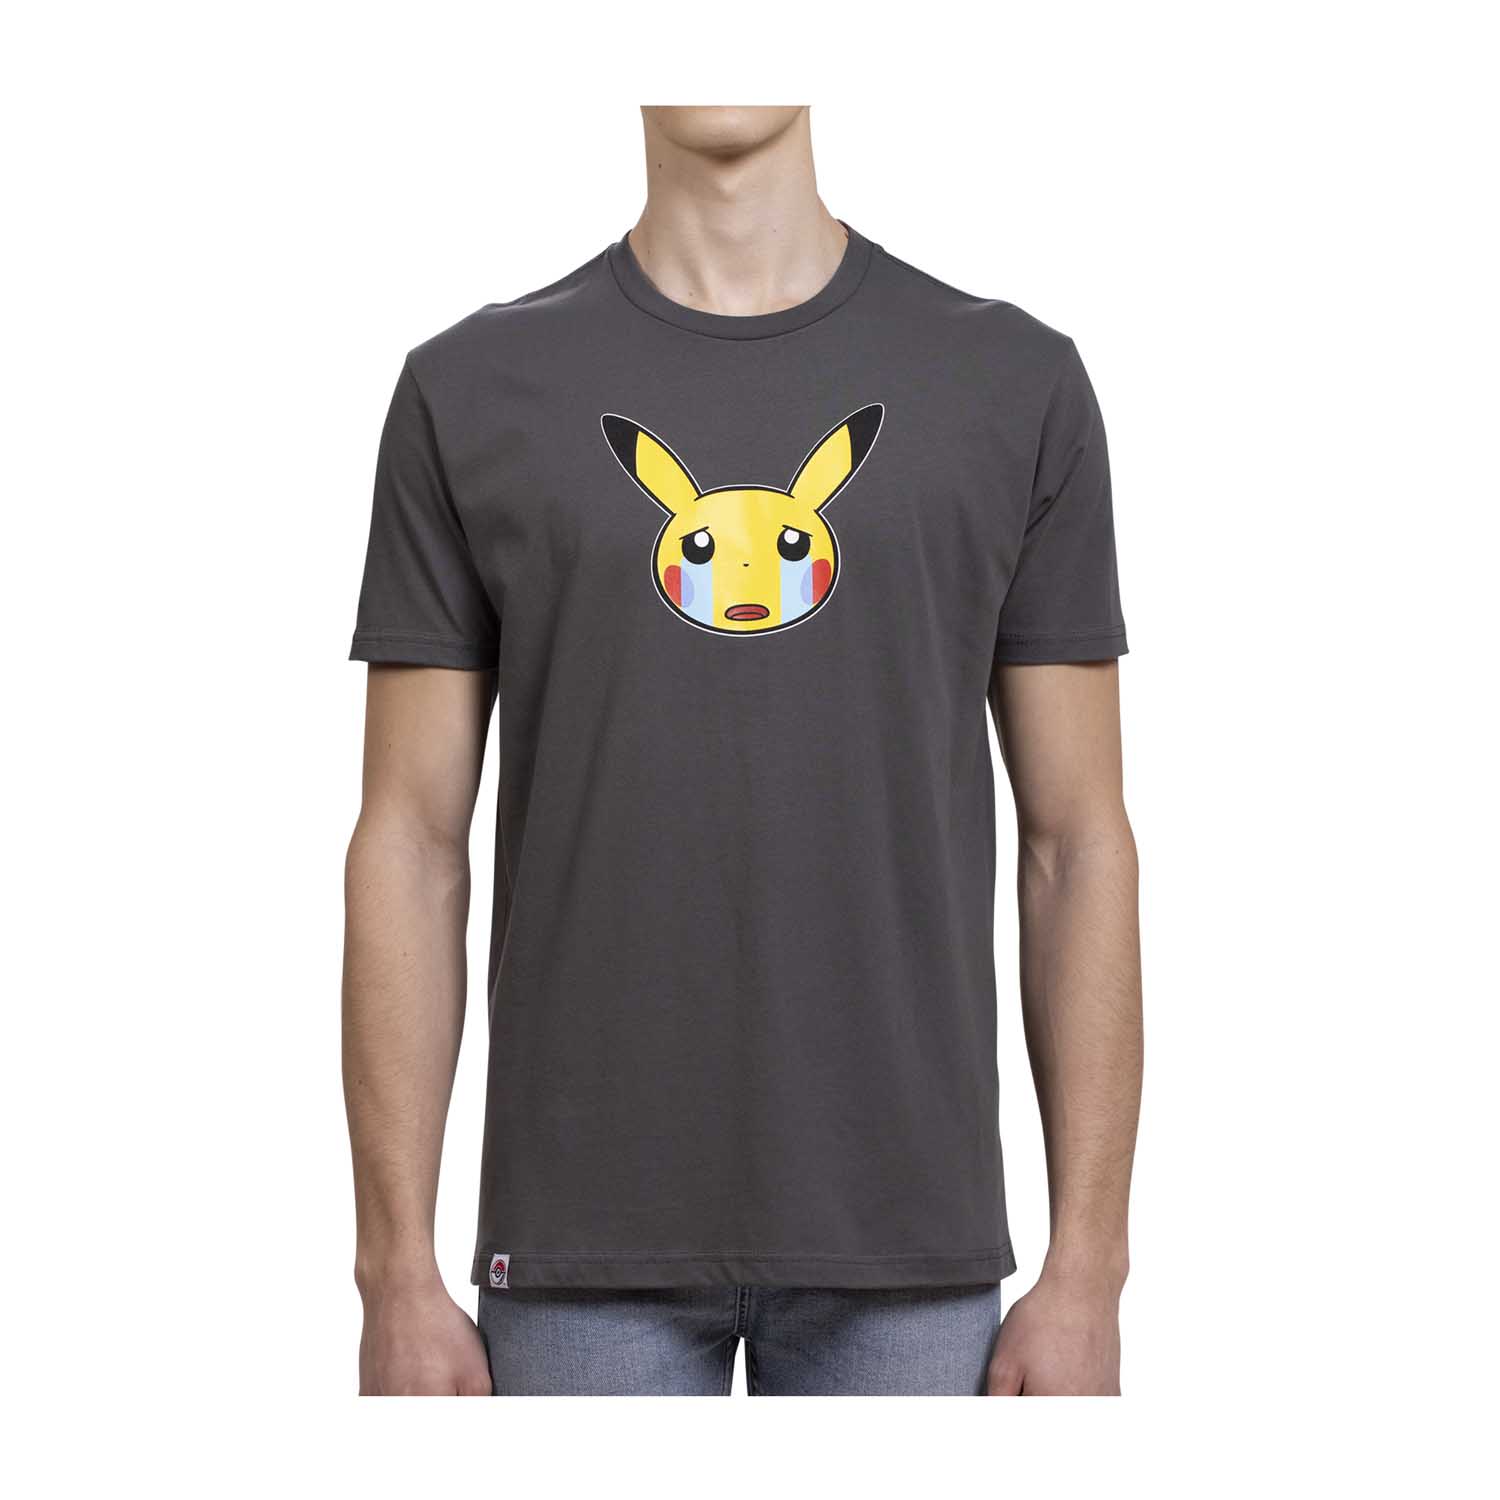 2XL Pikachu Face Pokemon Inspired T Shirt S